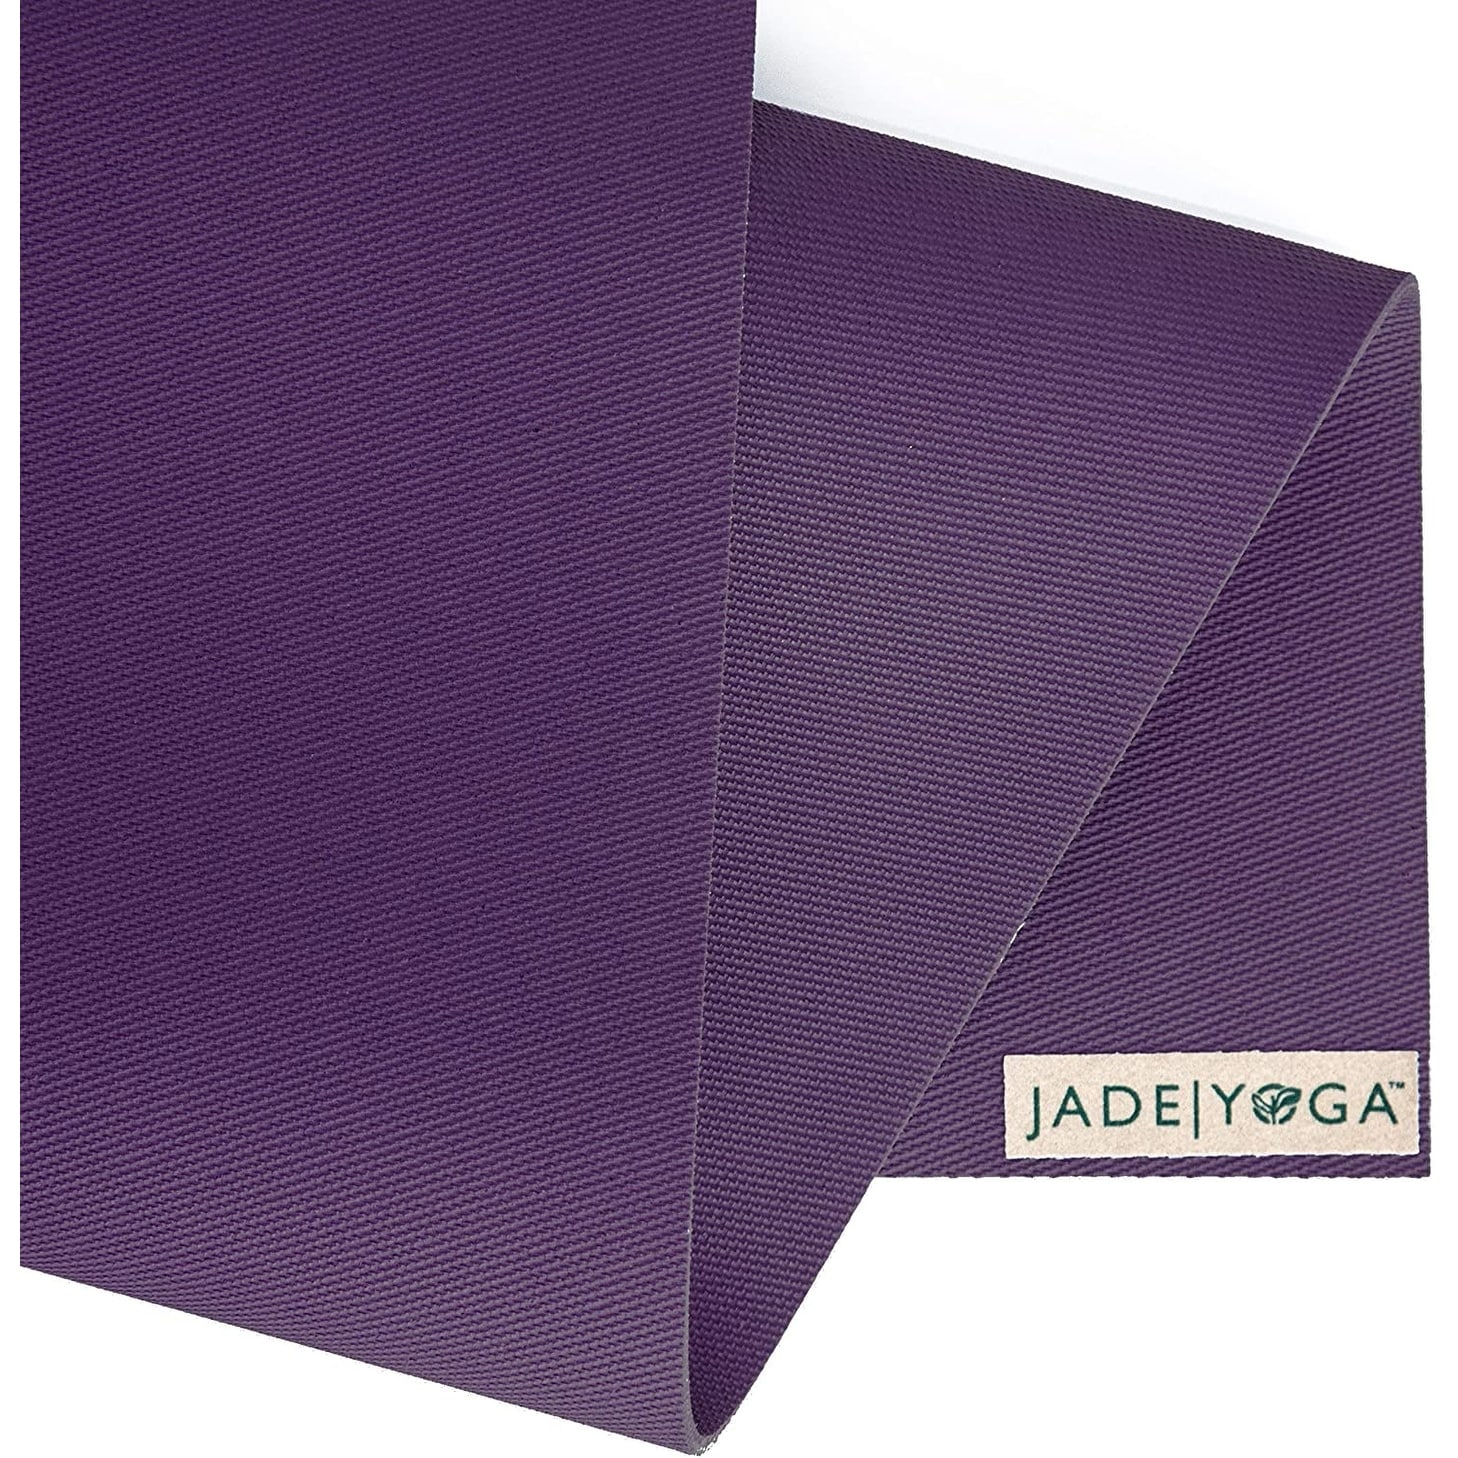 Jade Yoga Harmony Mat, Purple, 3/16 24 x 68 - Bed Bath & Beyond -  33866725